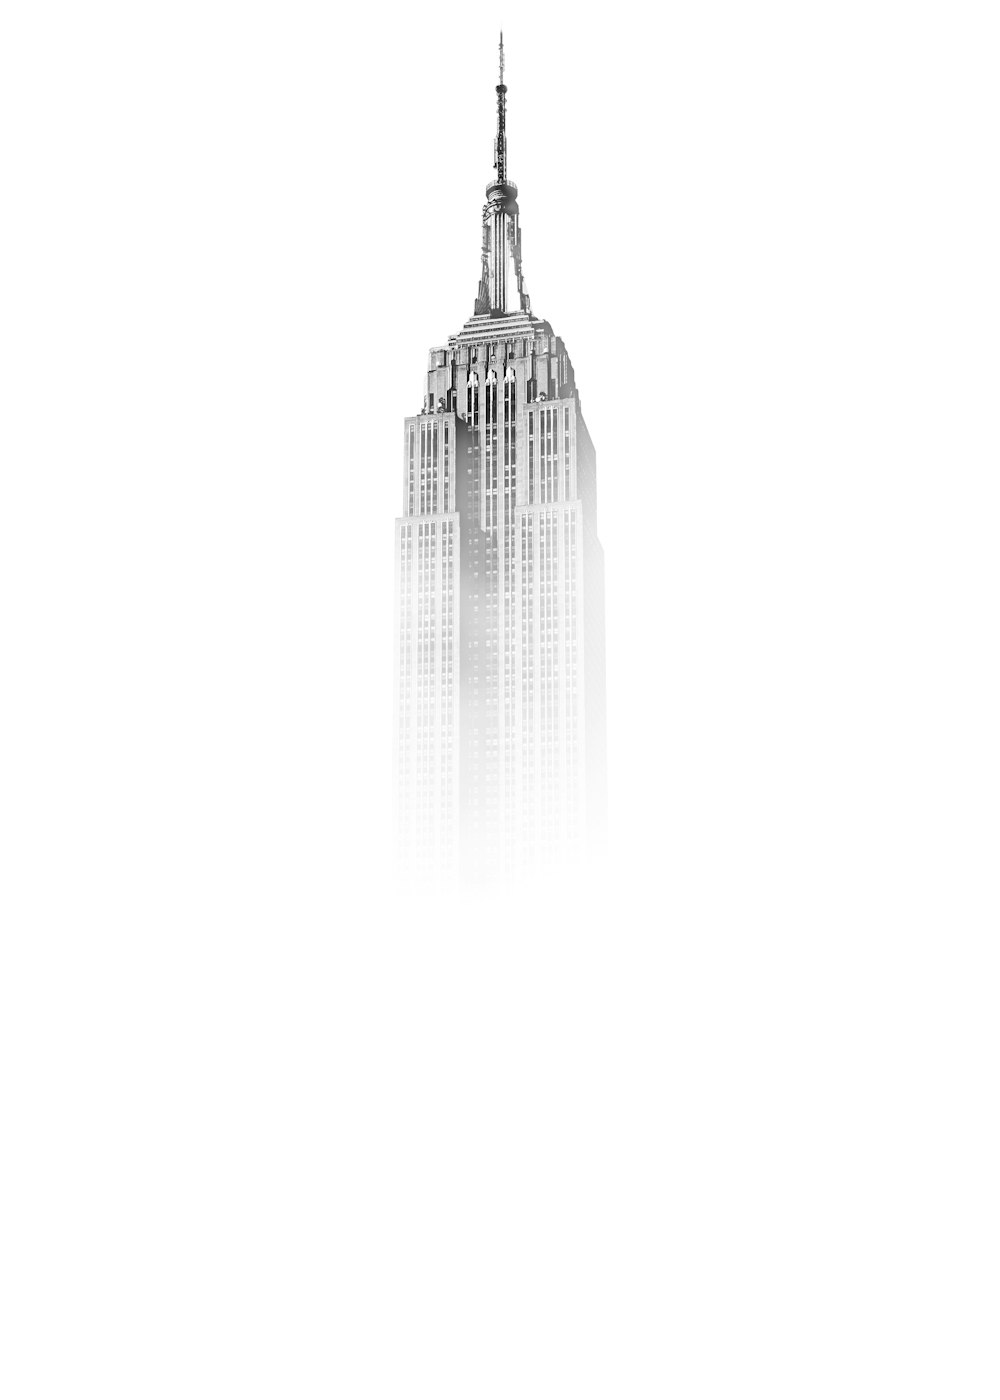 Croquis del Empire State Building